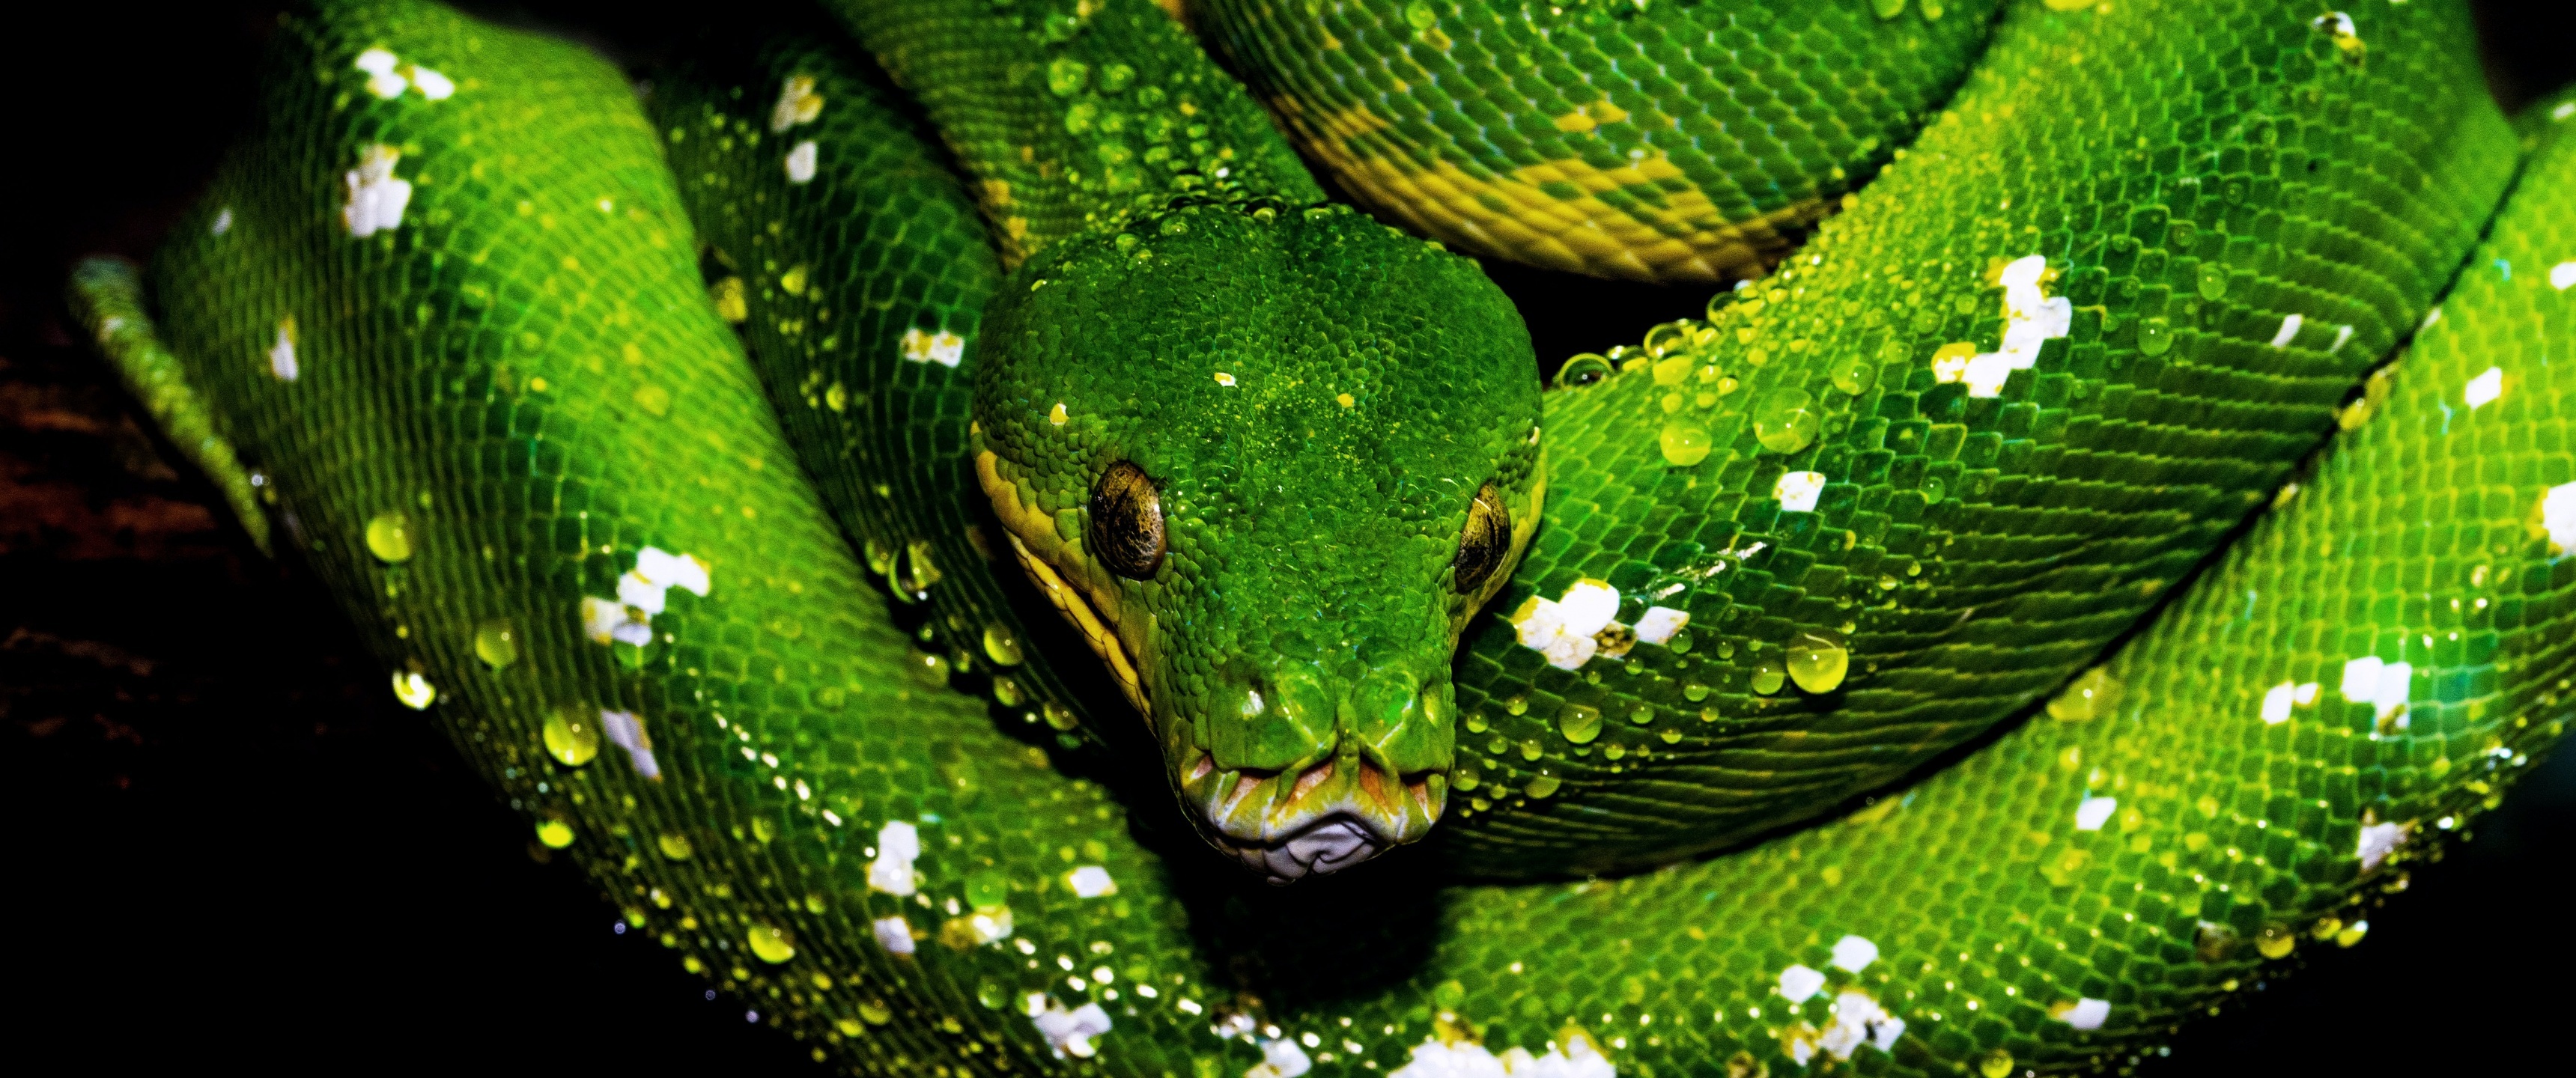 Tree python wallpaper, 4K resolution, Green snake, Water drops, 3440x1440 Dual Screen Desktop